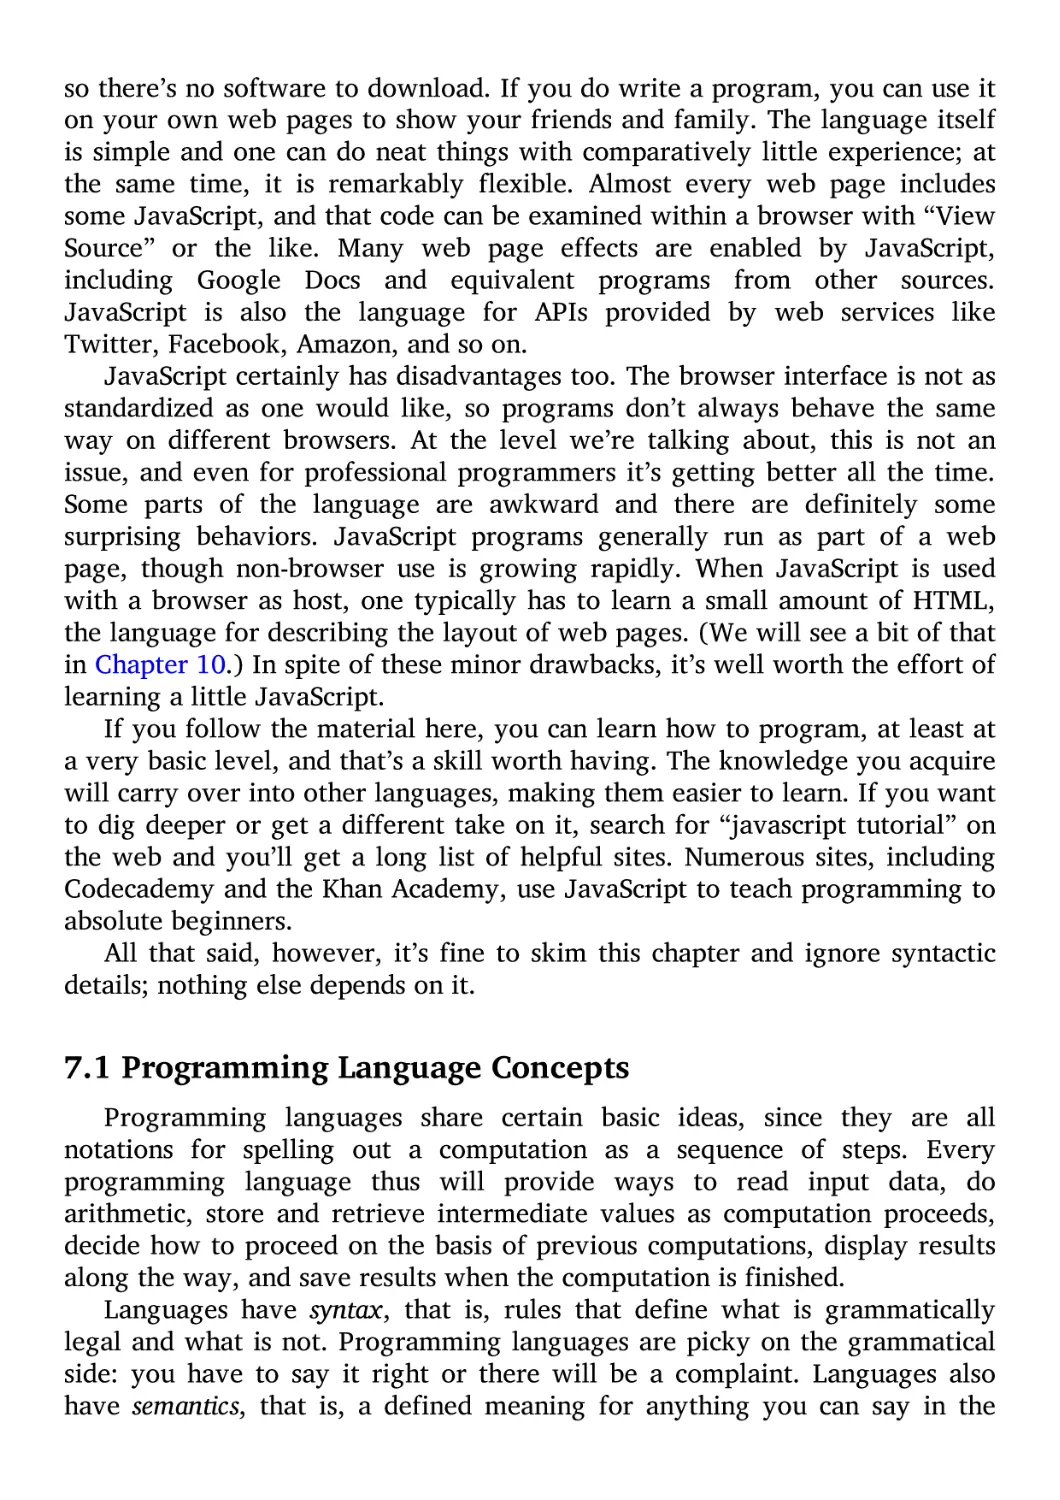 7.1 Programming Language Concepts